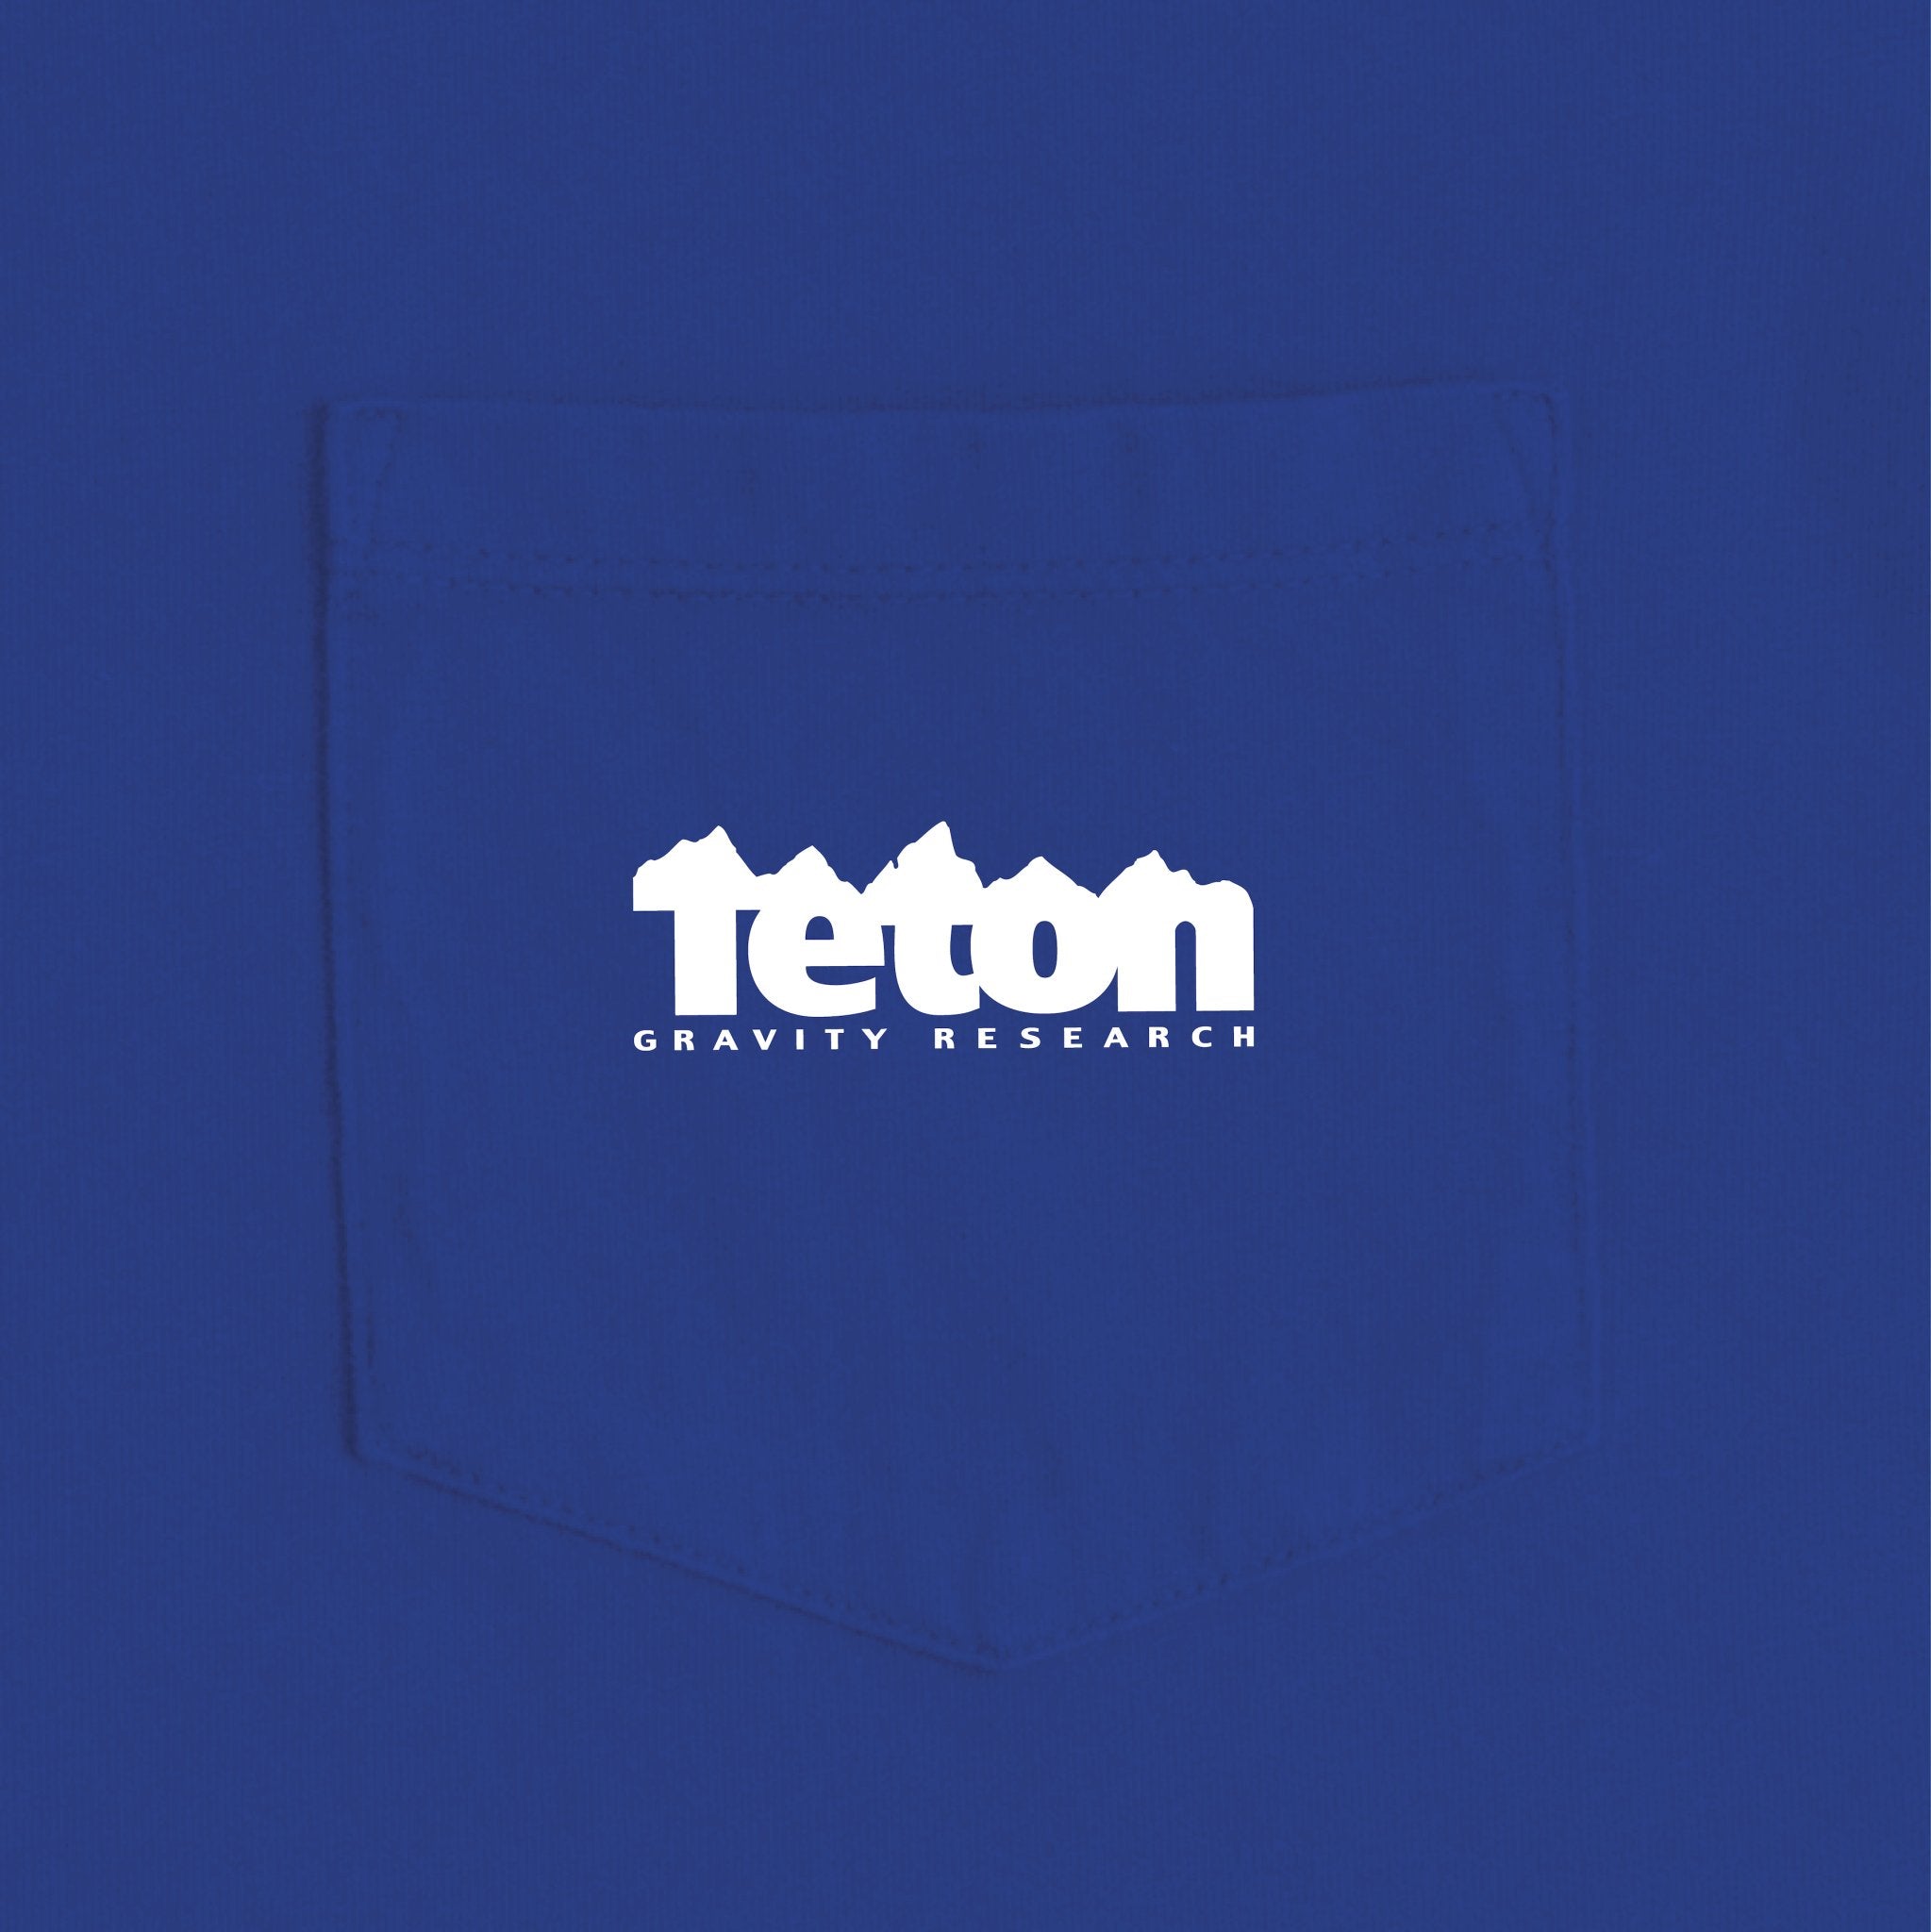 Classic Long Sleeve Pocket Tee - Teton Gravity Research